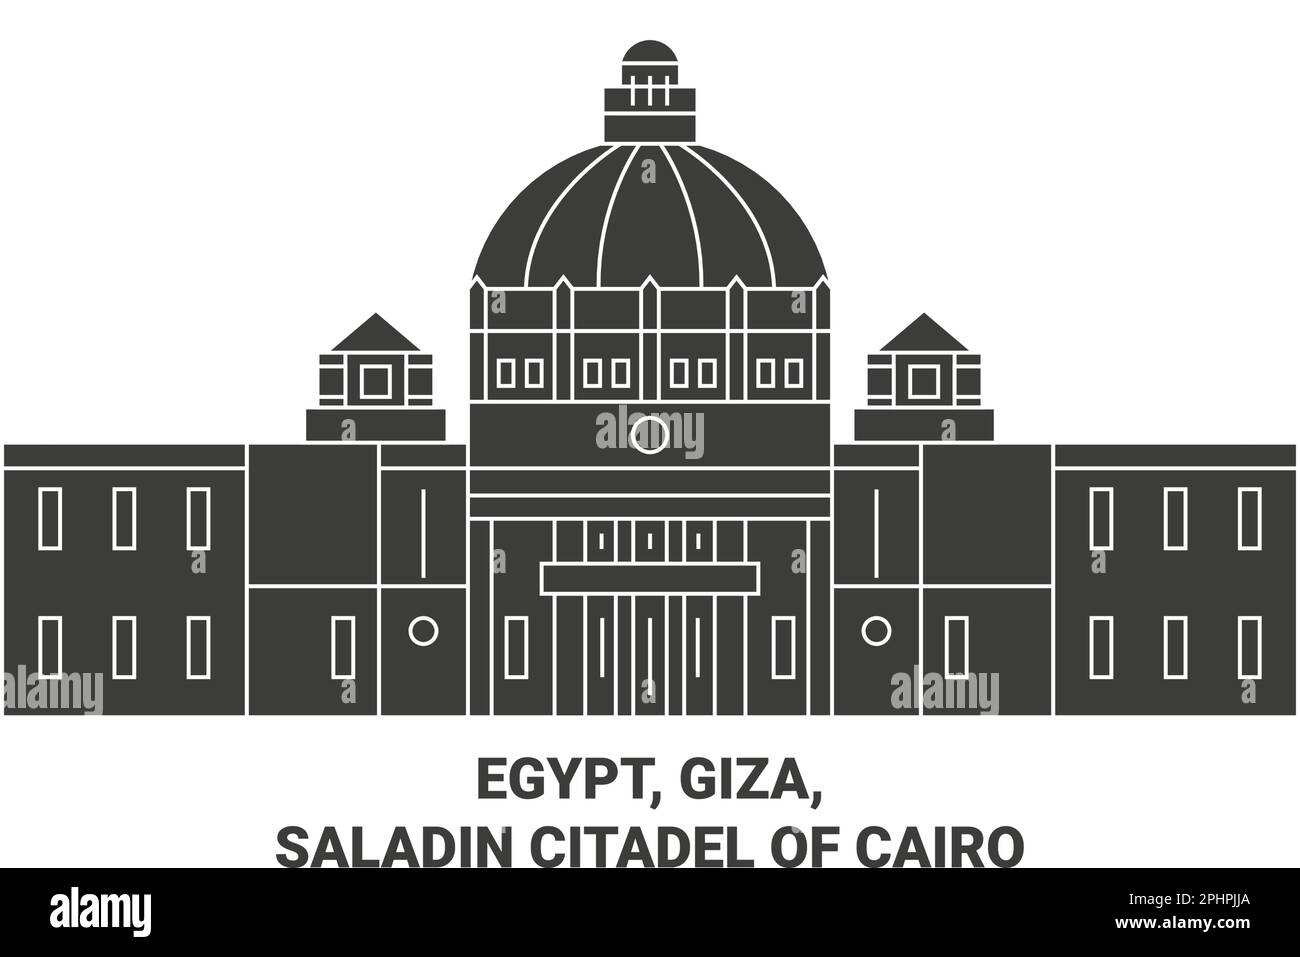 Egypt, Giza, Saladin Citadel Of Cairo travel landmark vector illustration Stock Vector